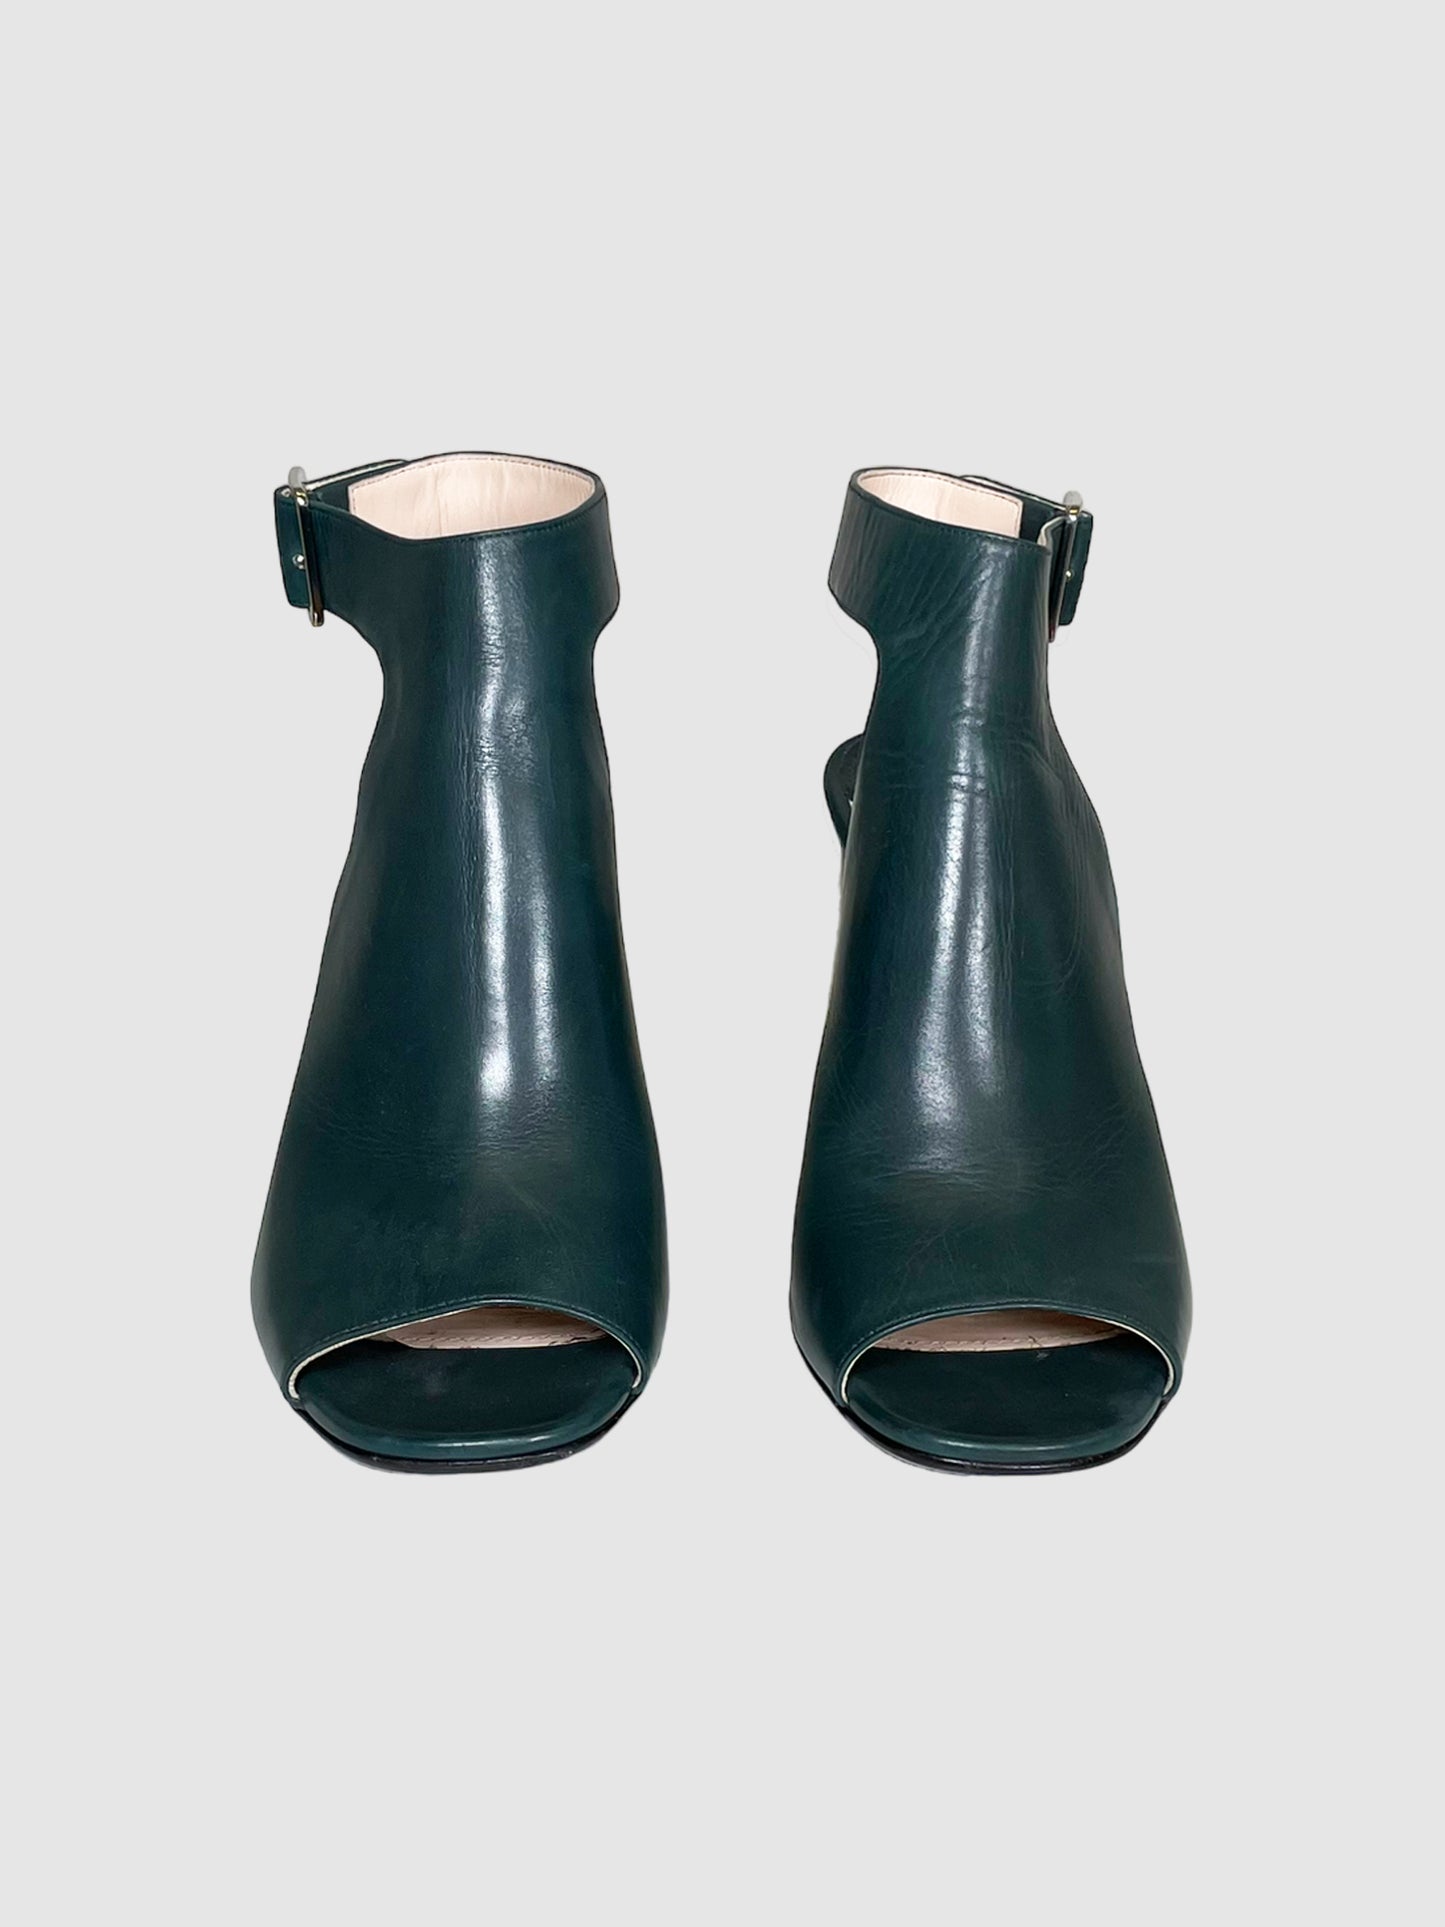 Prada Leather Peep Toe Pumps - Size 38.5